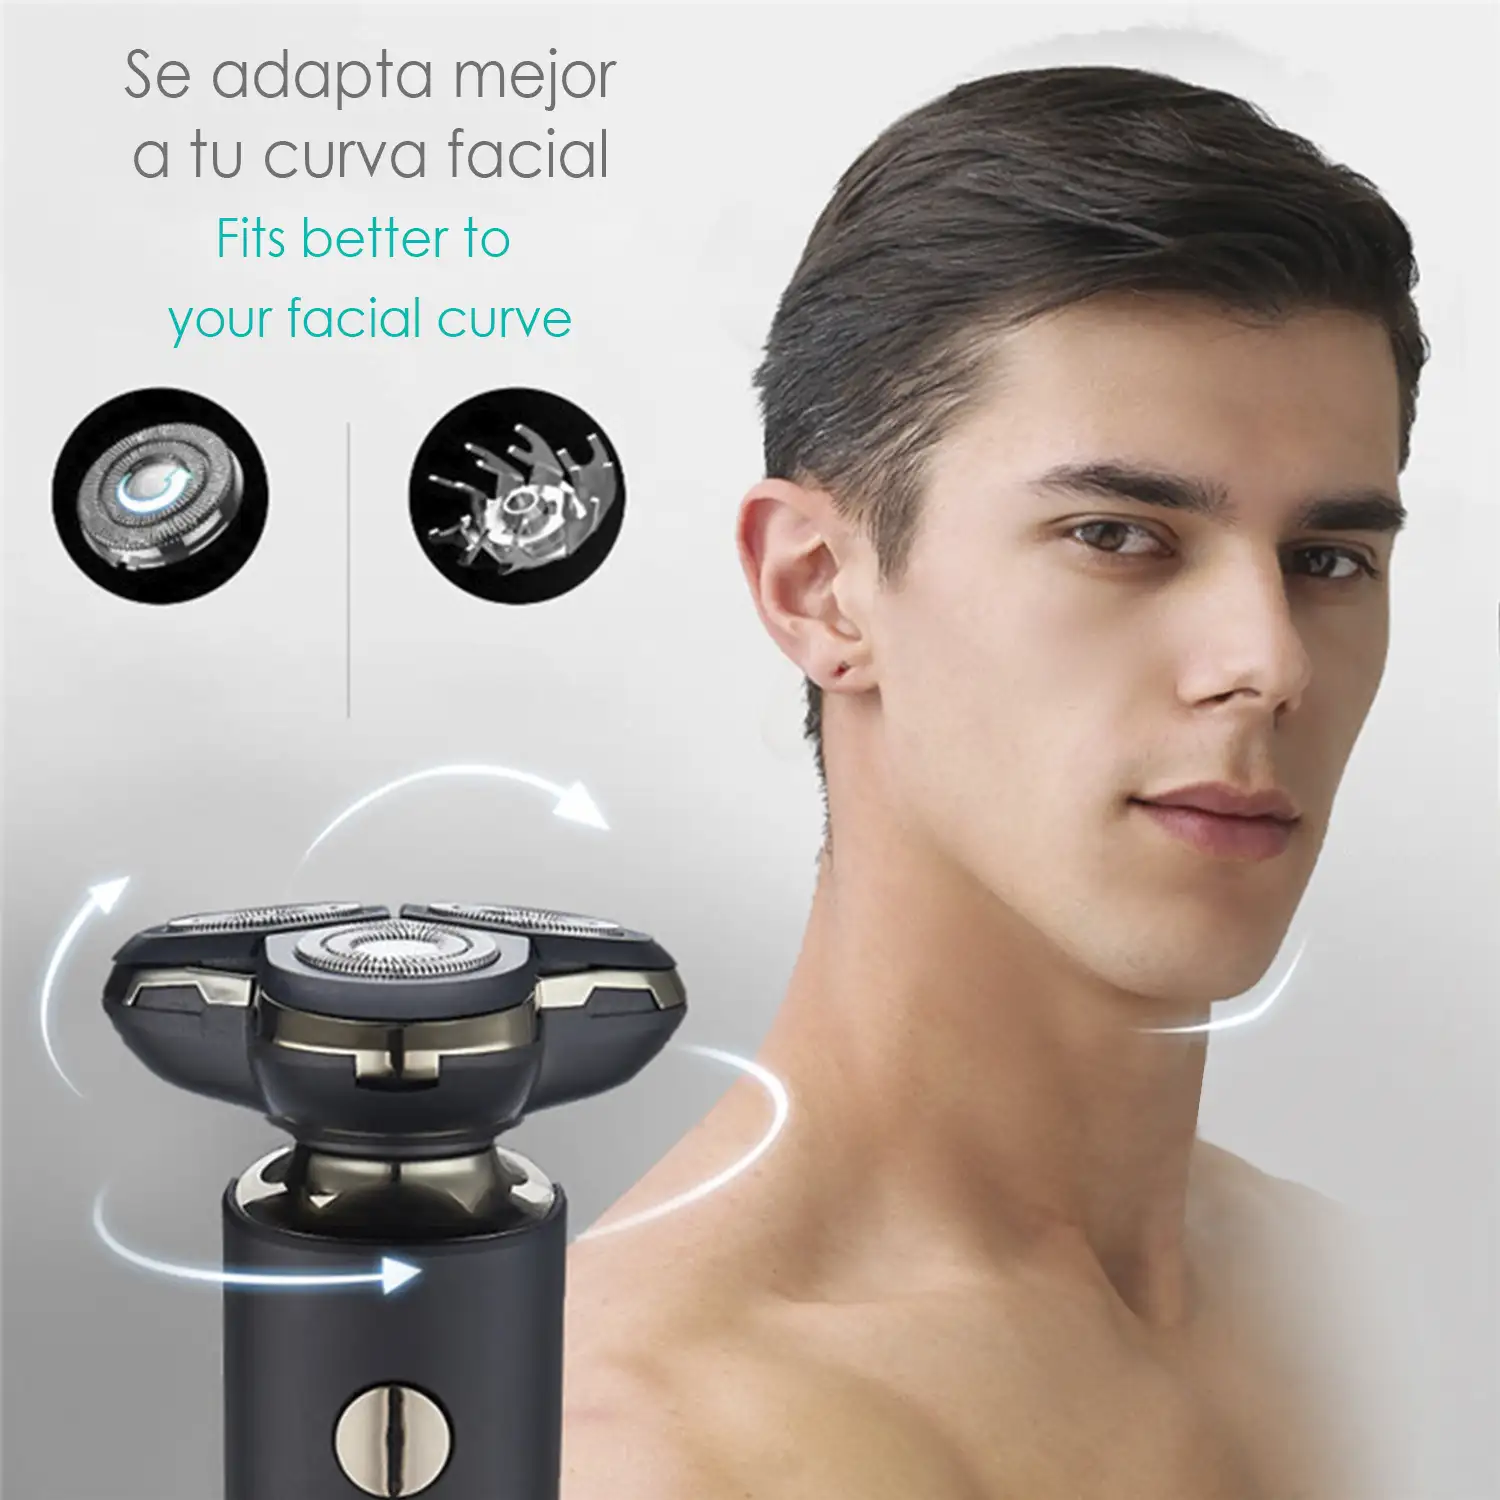 Máquina de afeitar 3D multifunción 5 en 1. Incluye cabezal de recorte, para nariz, de masaje, cepillo y de rasurado. Batería recargable.